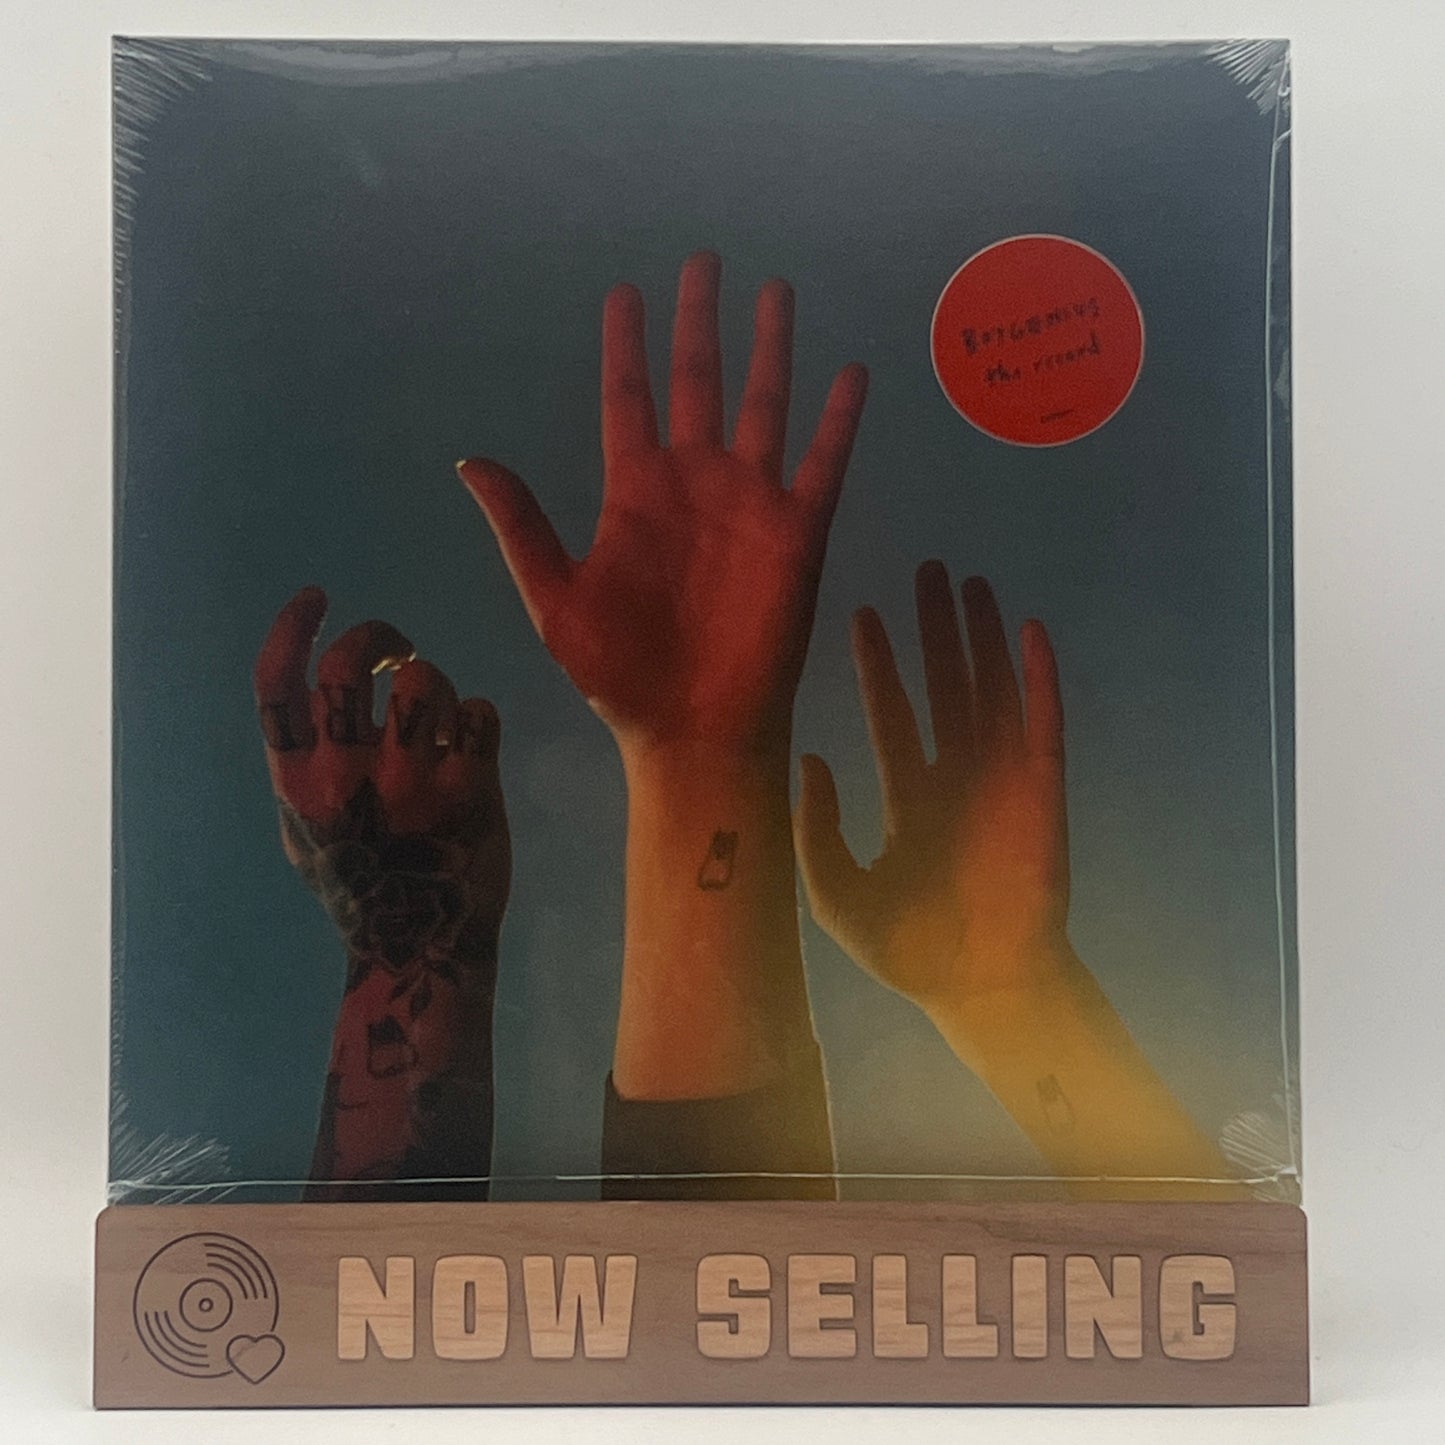 boygenius – The Record Vinyl LP Clear Indie Exclusive SEALED